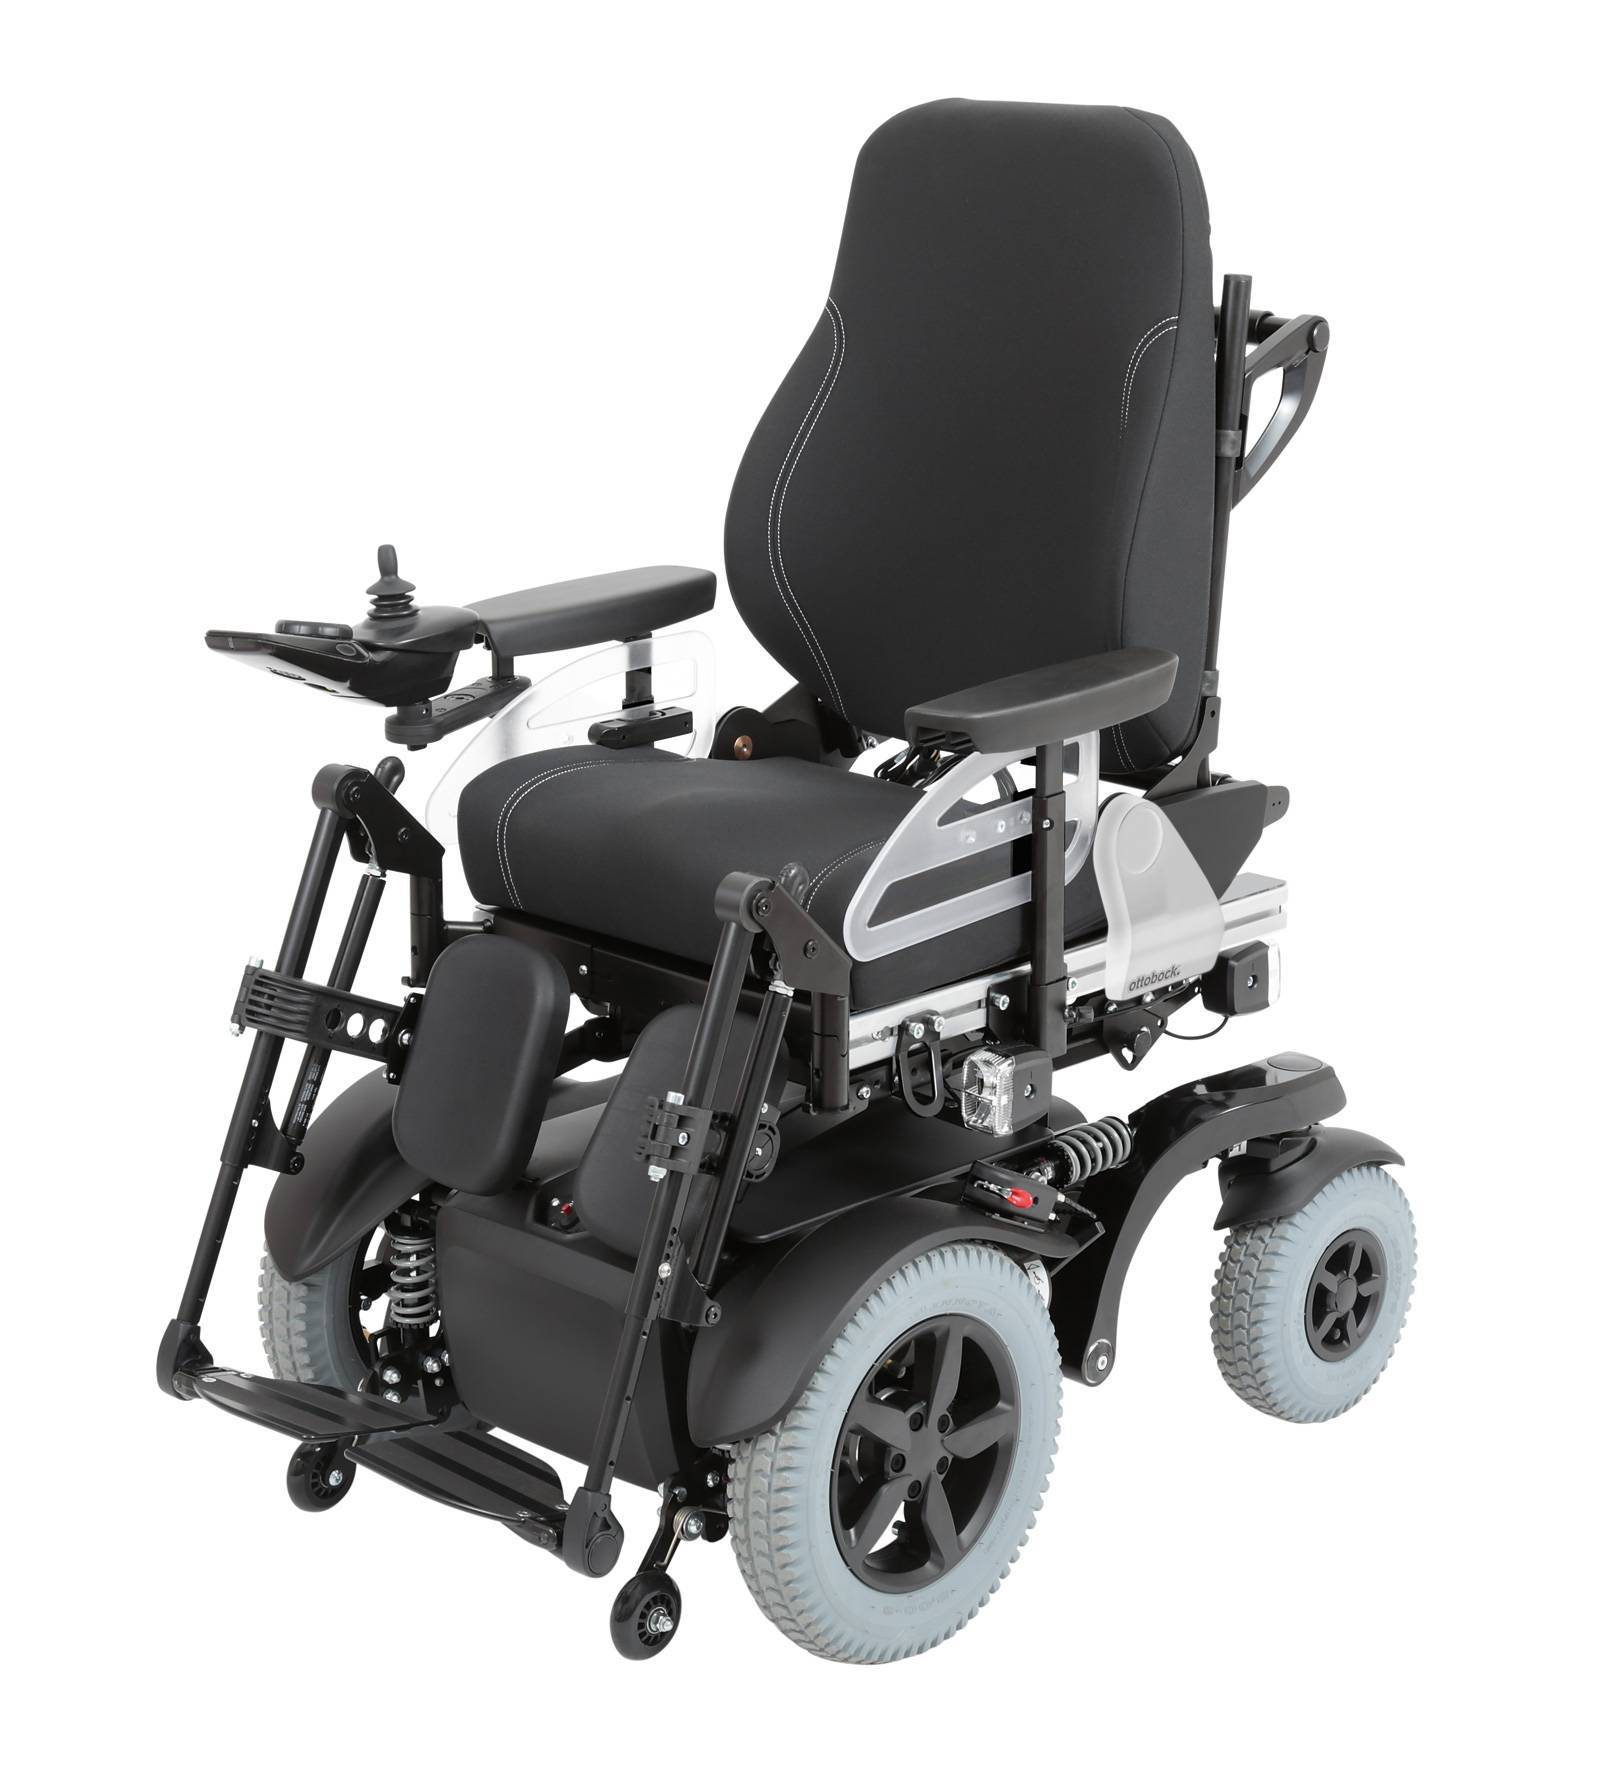 Коляски инвалидные с приводом цена. Коляска Otto Bock Juvo. Коляска инвалидная Juvo b5. Инвалидная коляска с электроприводом Otto Bock Juvo b4. Кресло-коляска с электроприводом Ottobock b400.